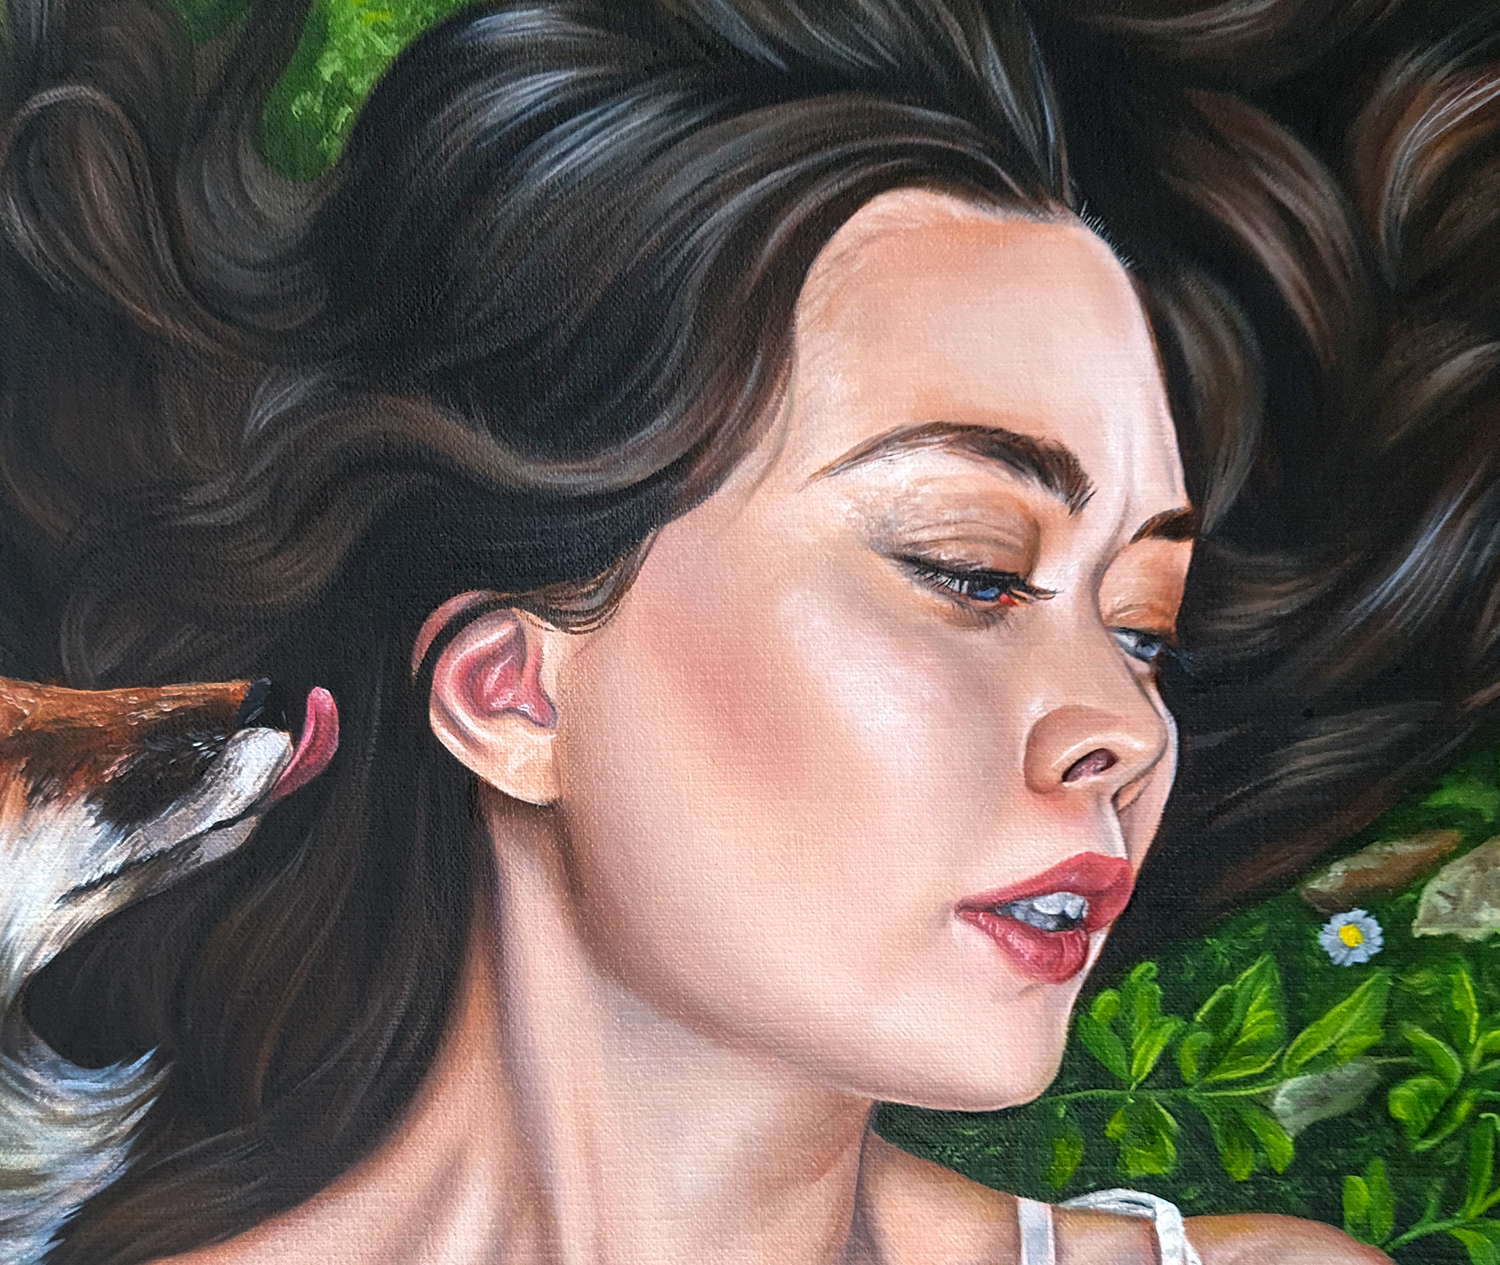 detail shot of the girl face portrait